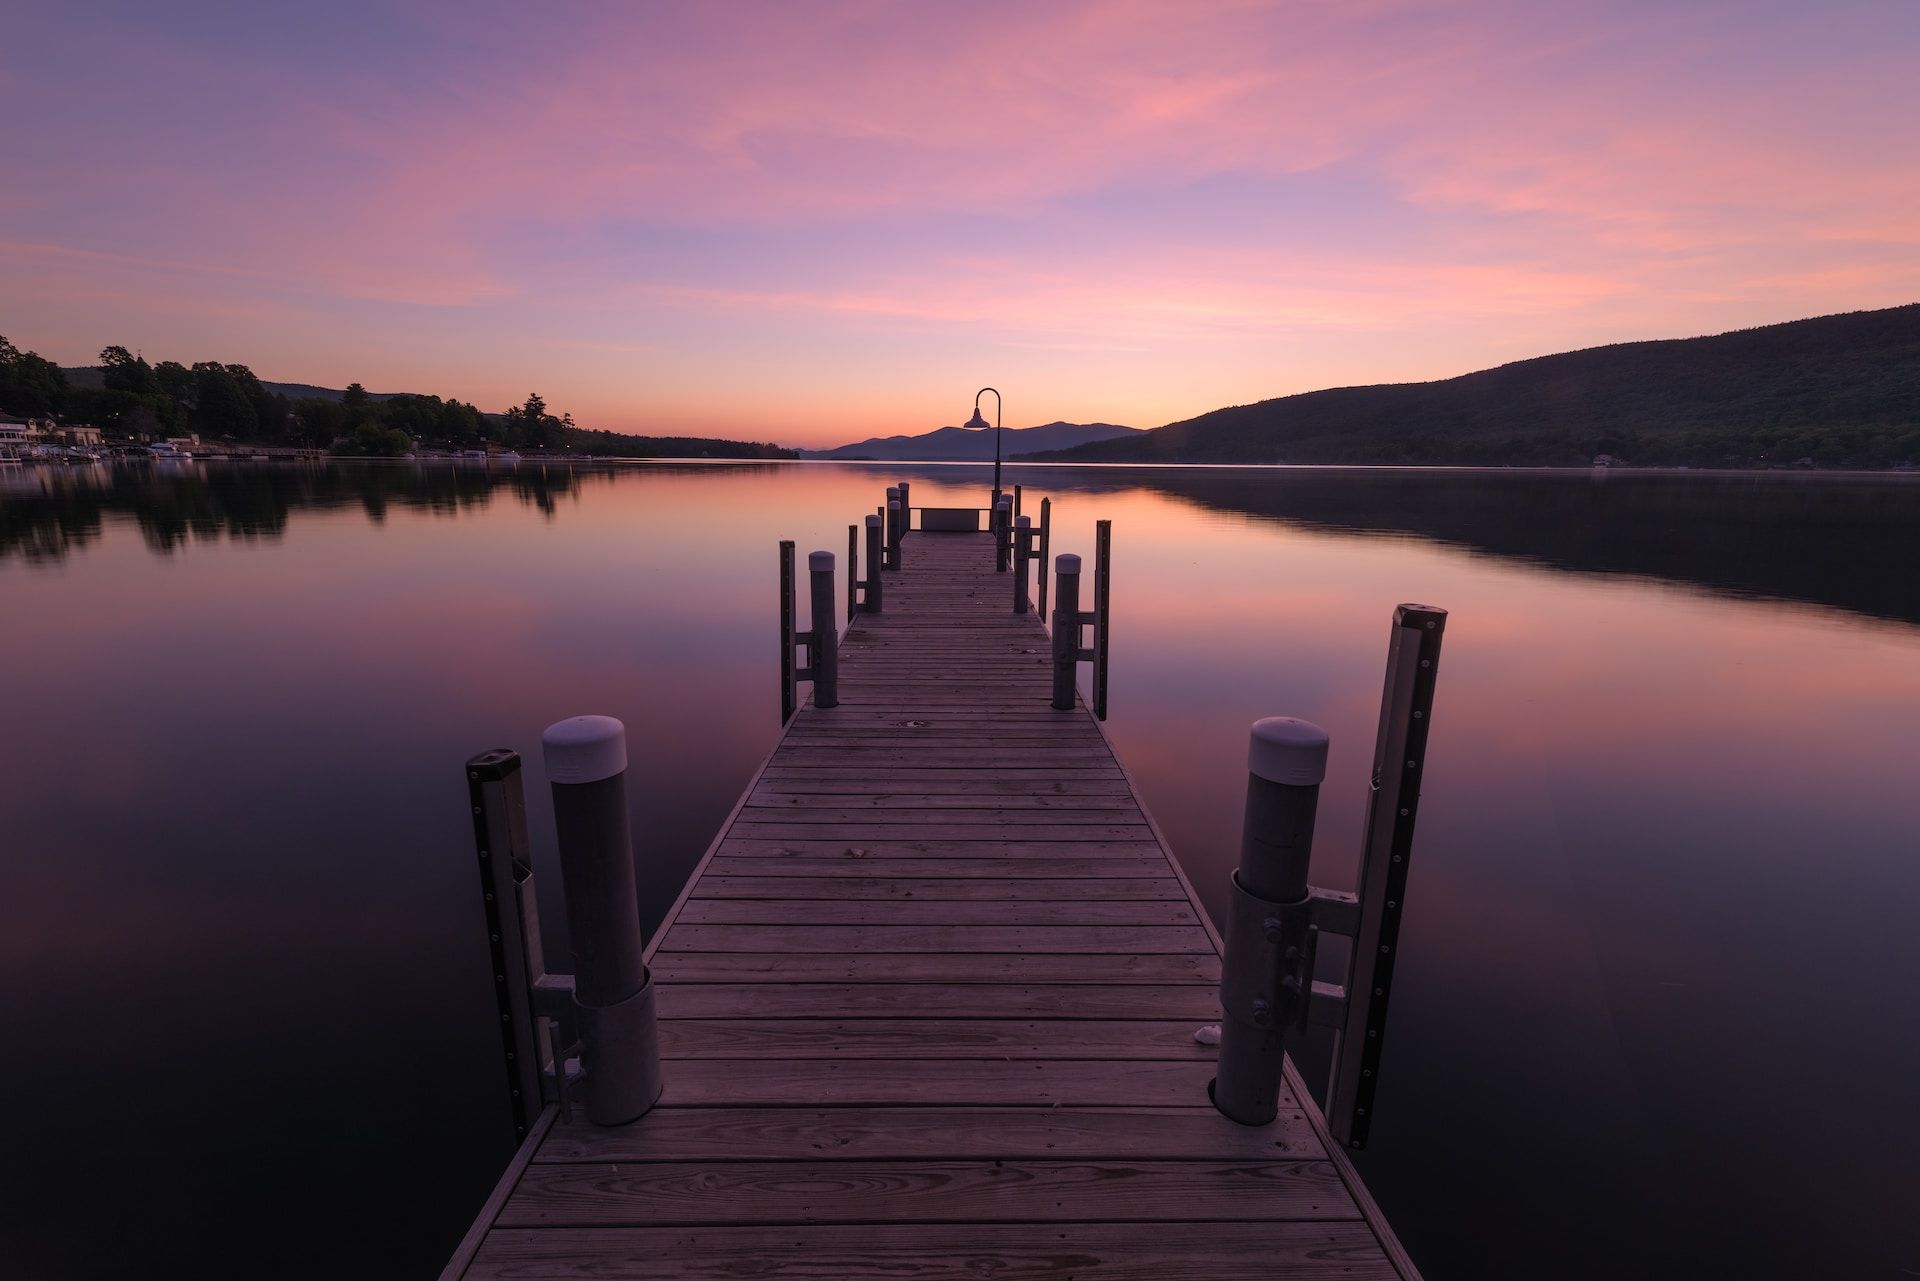 Lake George against a purple sky